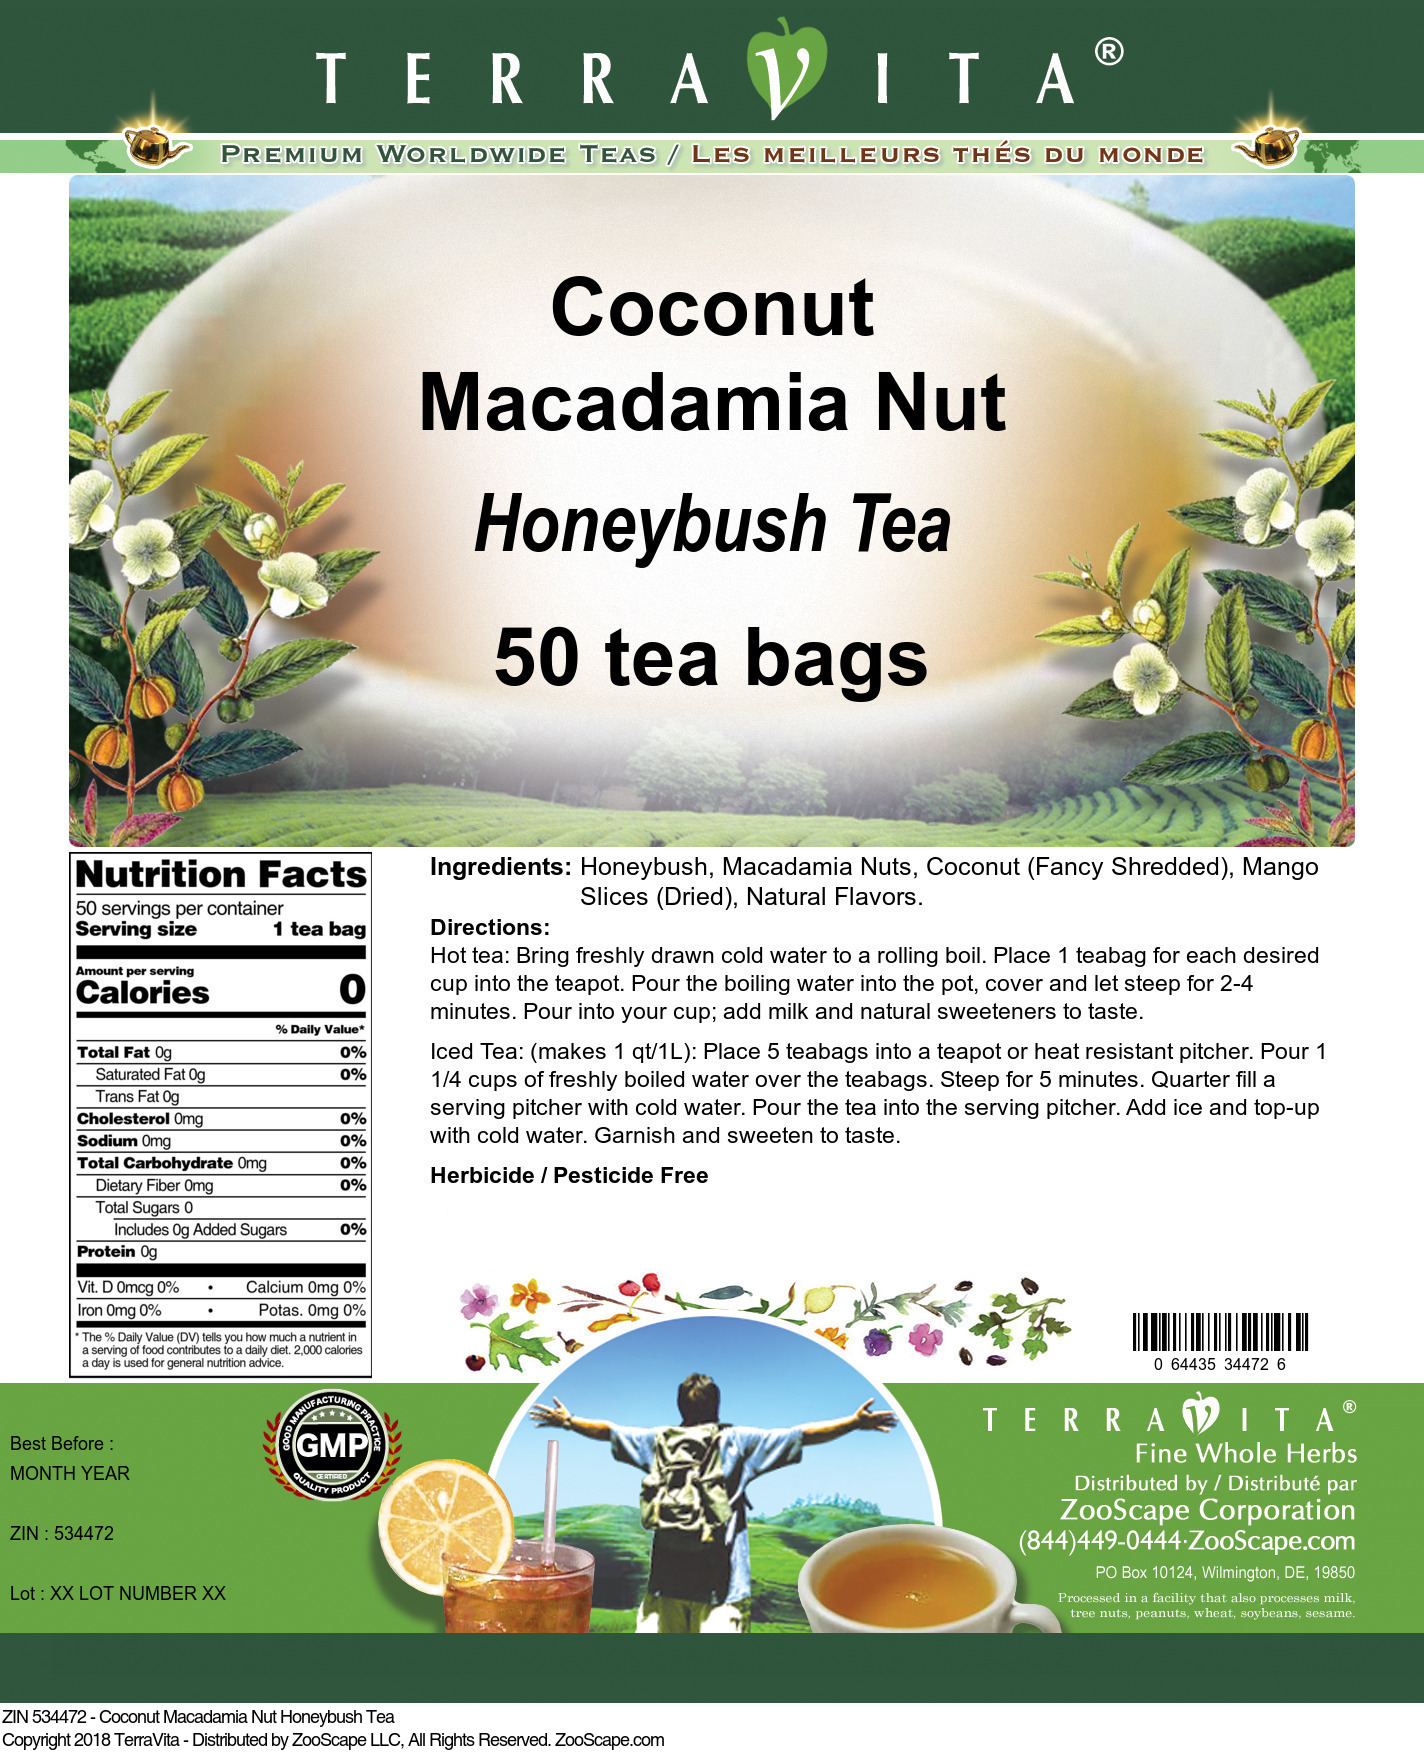 Coconut Macadamia Nut Honeybush Tea - Label